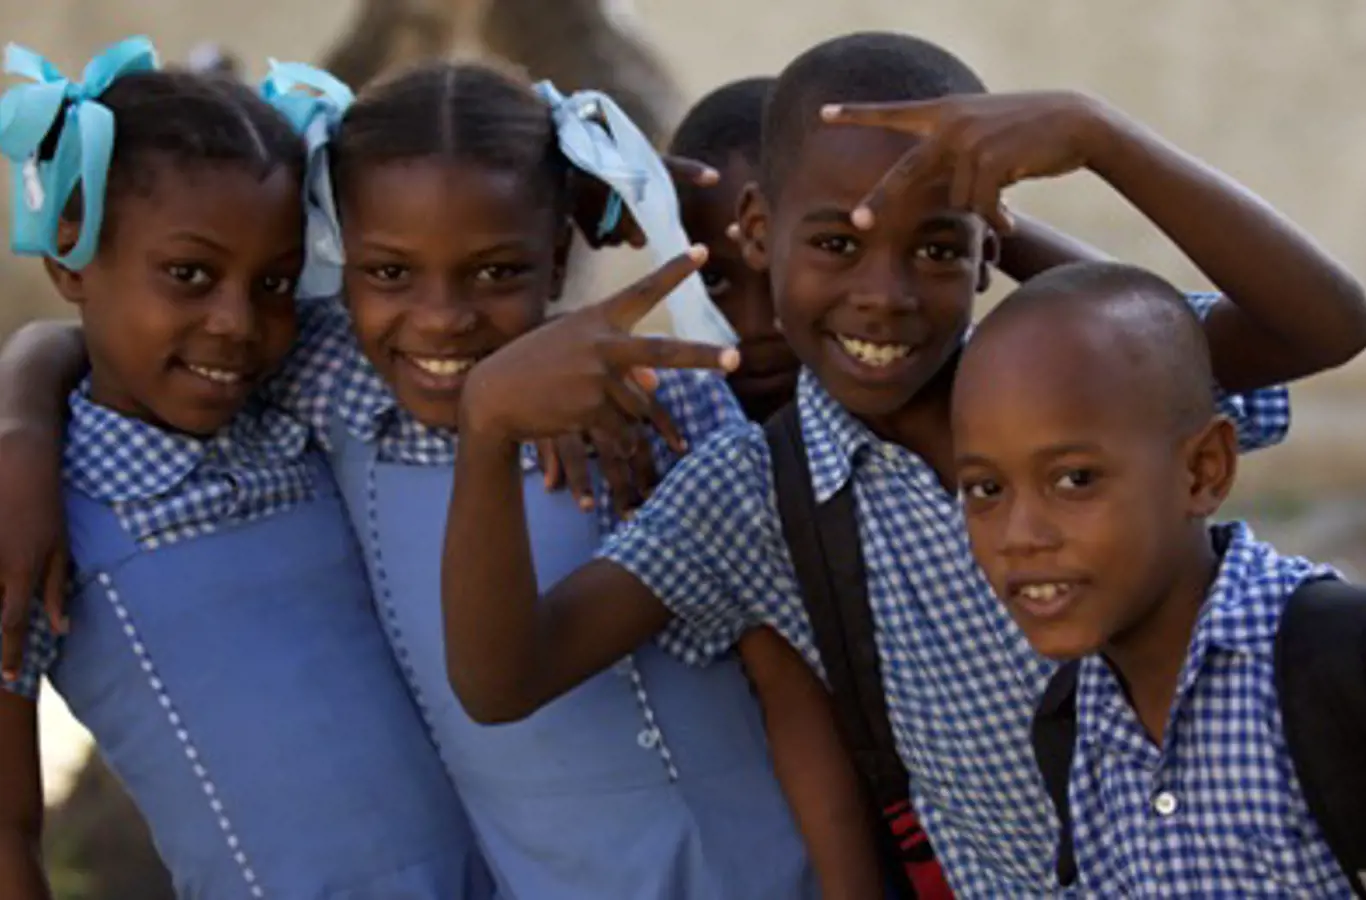 Børn fra Haiti, som er det fattigste land på den vestlige halvkugle.